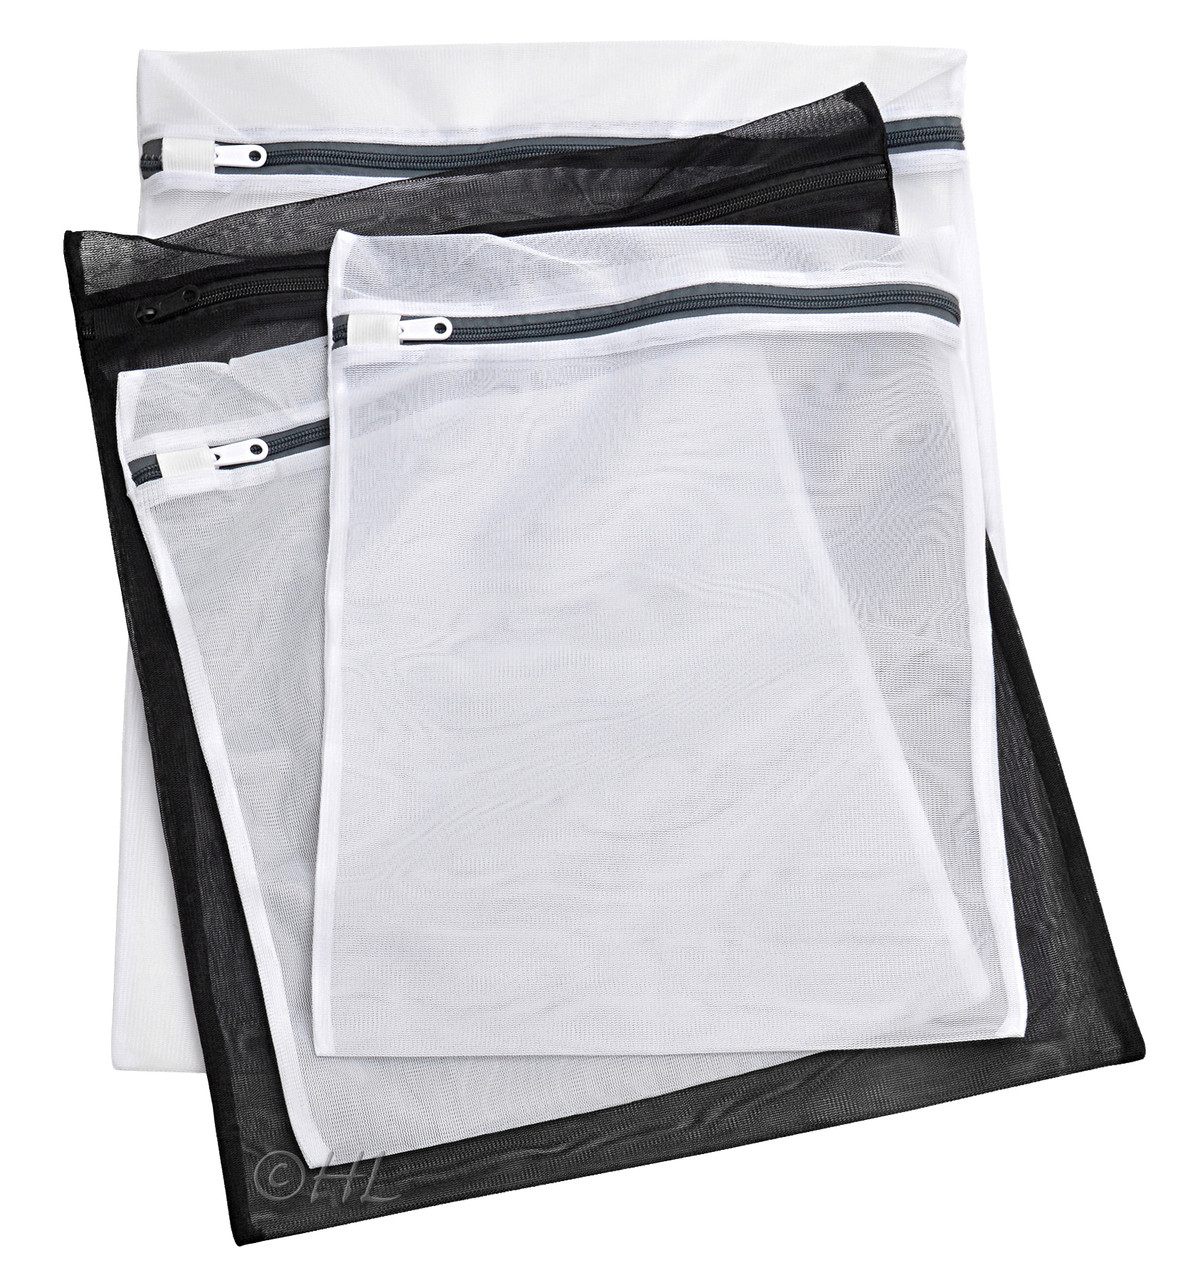 Clothes Washing Bag Mesh Wash Bag Lingerie Delicates Laundry Zipper 3 Sizes T aq 